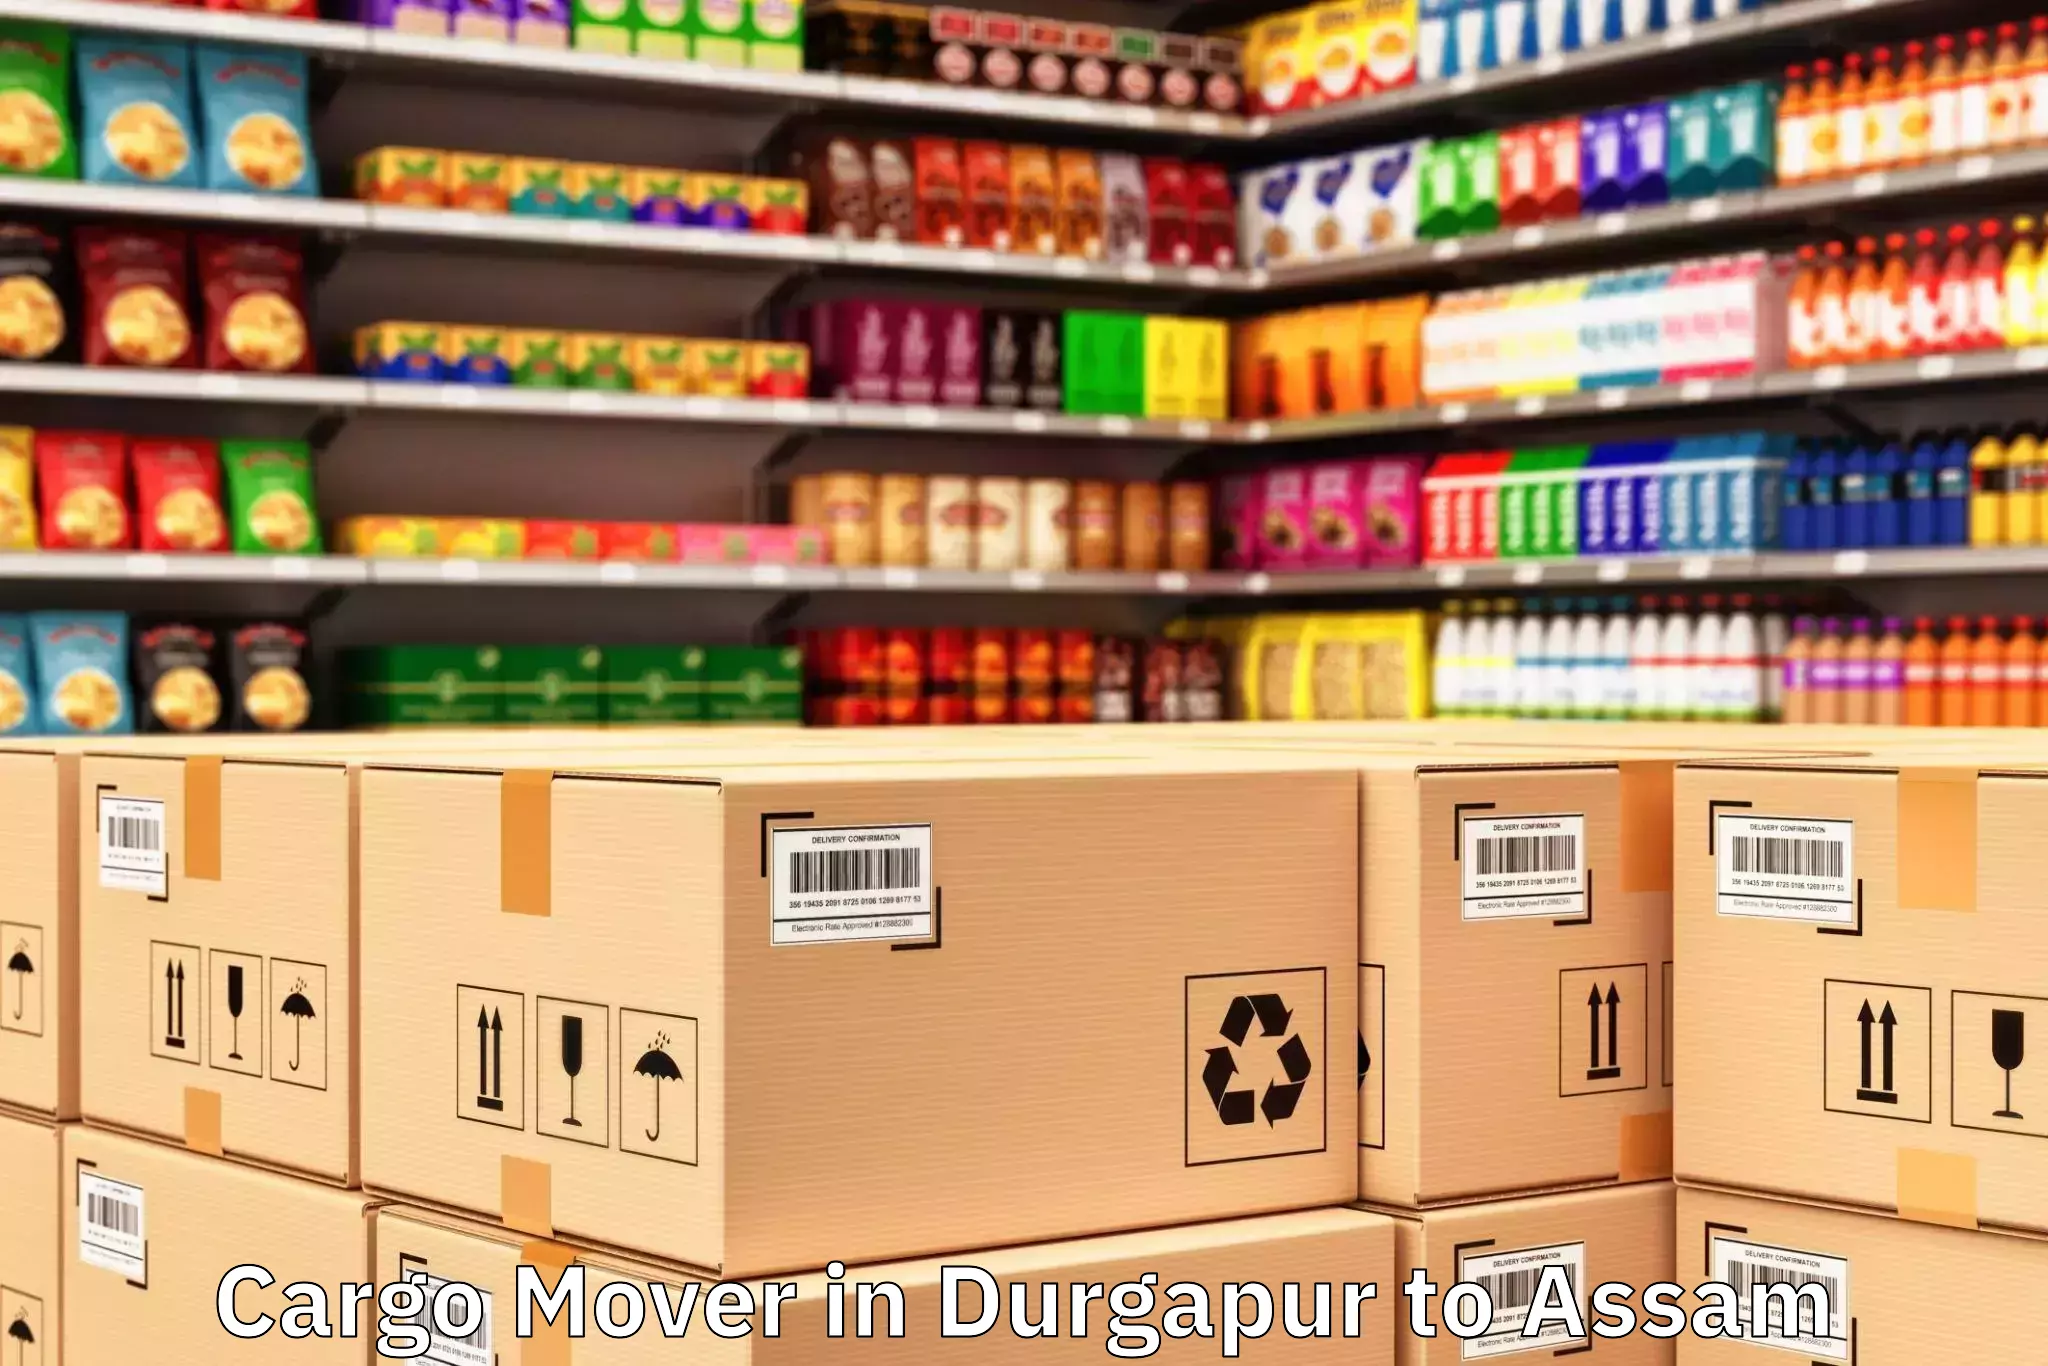 Efficient Durgapur to Sorbhog Cargo Mover